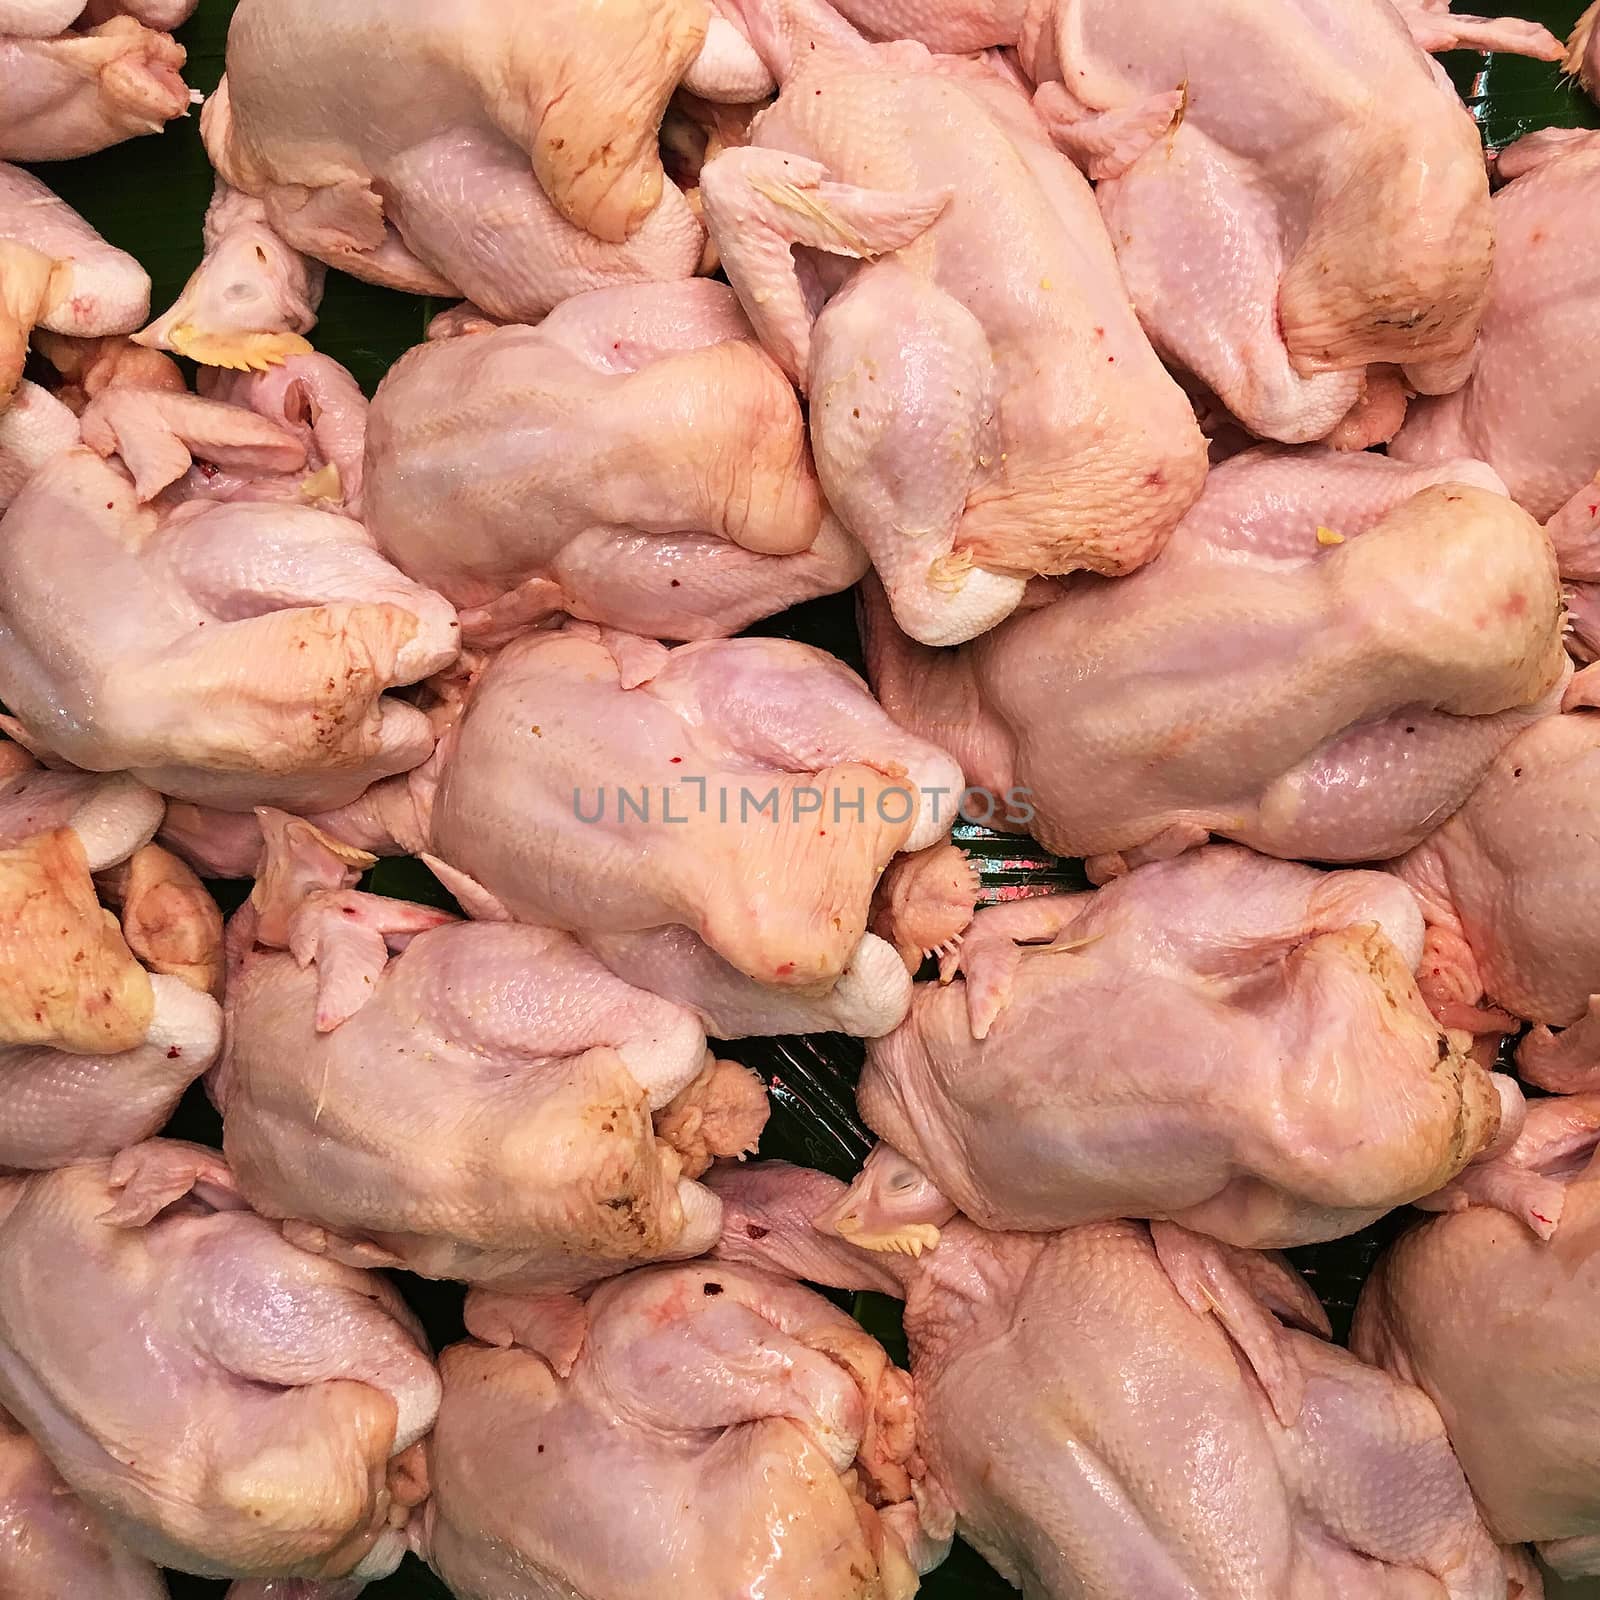 Dead chicken in Market